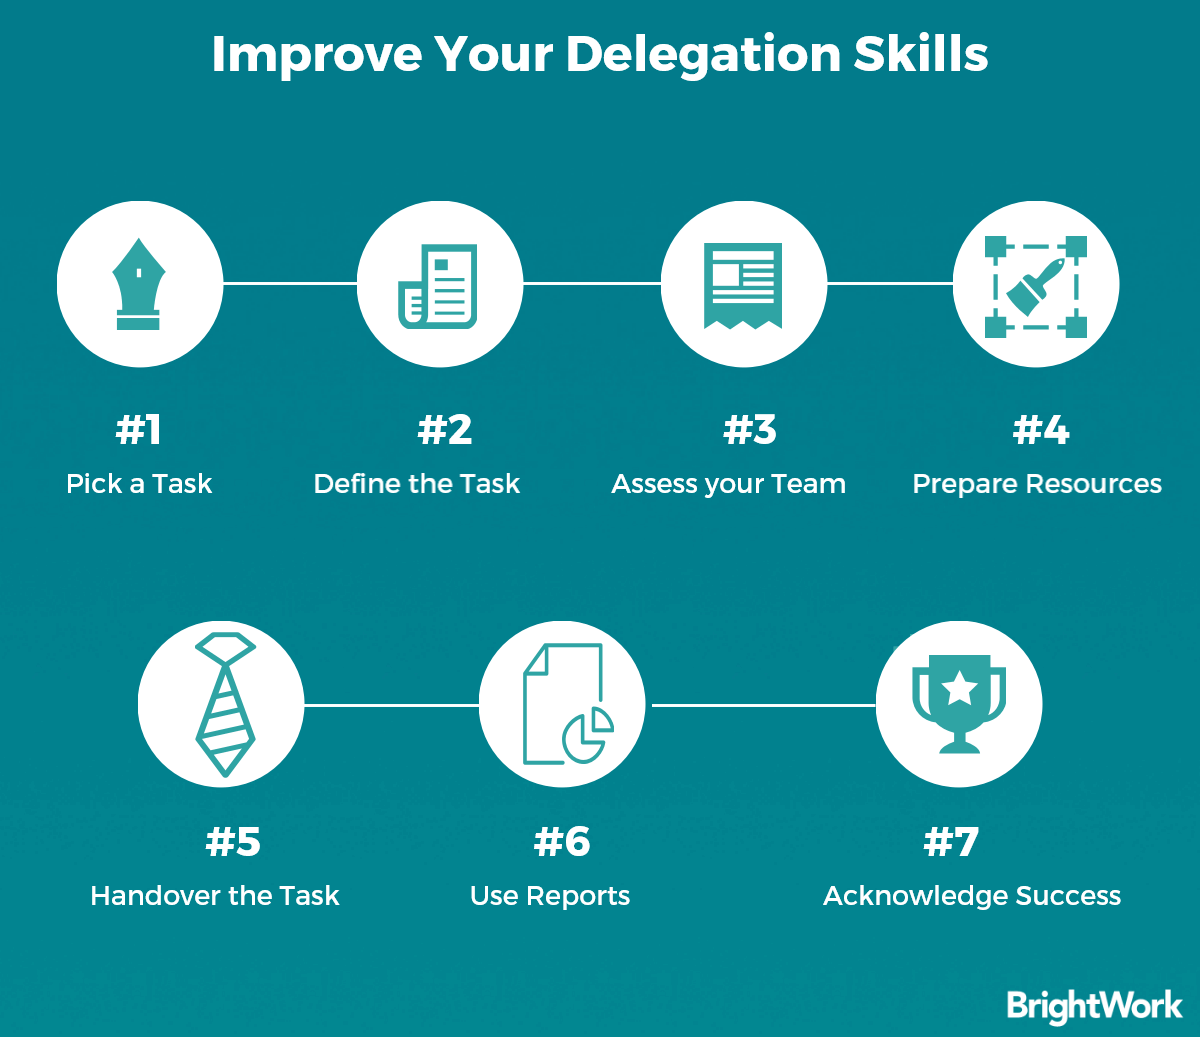 7 Ways to Improve Your Delegation Skills